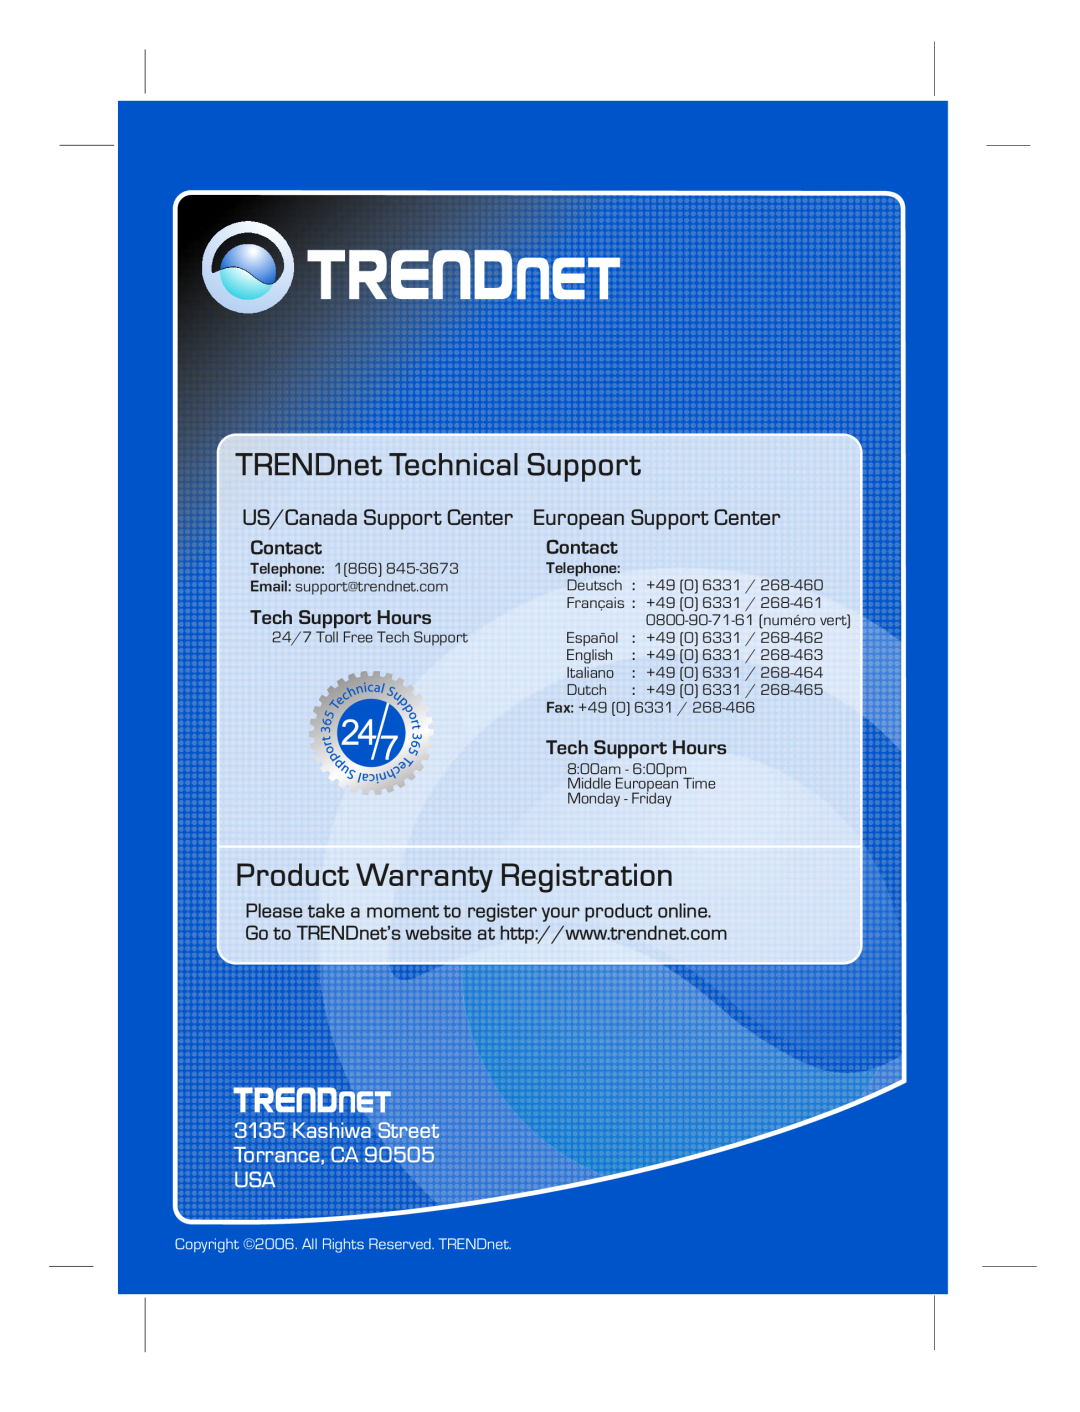 TRENDnet TFM-PCIV92 TRENDnet Technical Support, Product Warranty Registration, Kashiwa Street Torrance, CA USA, Contact 